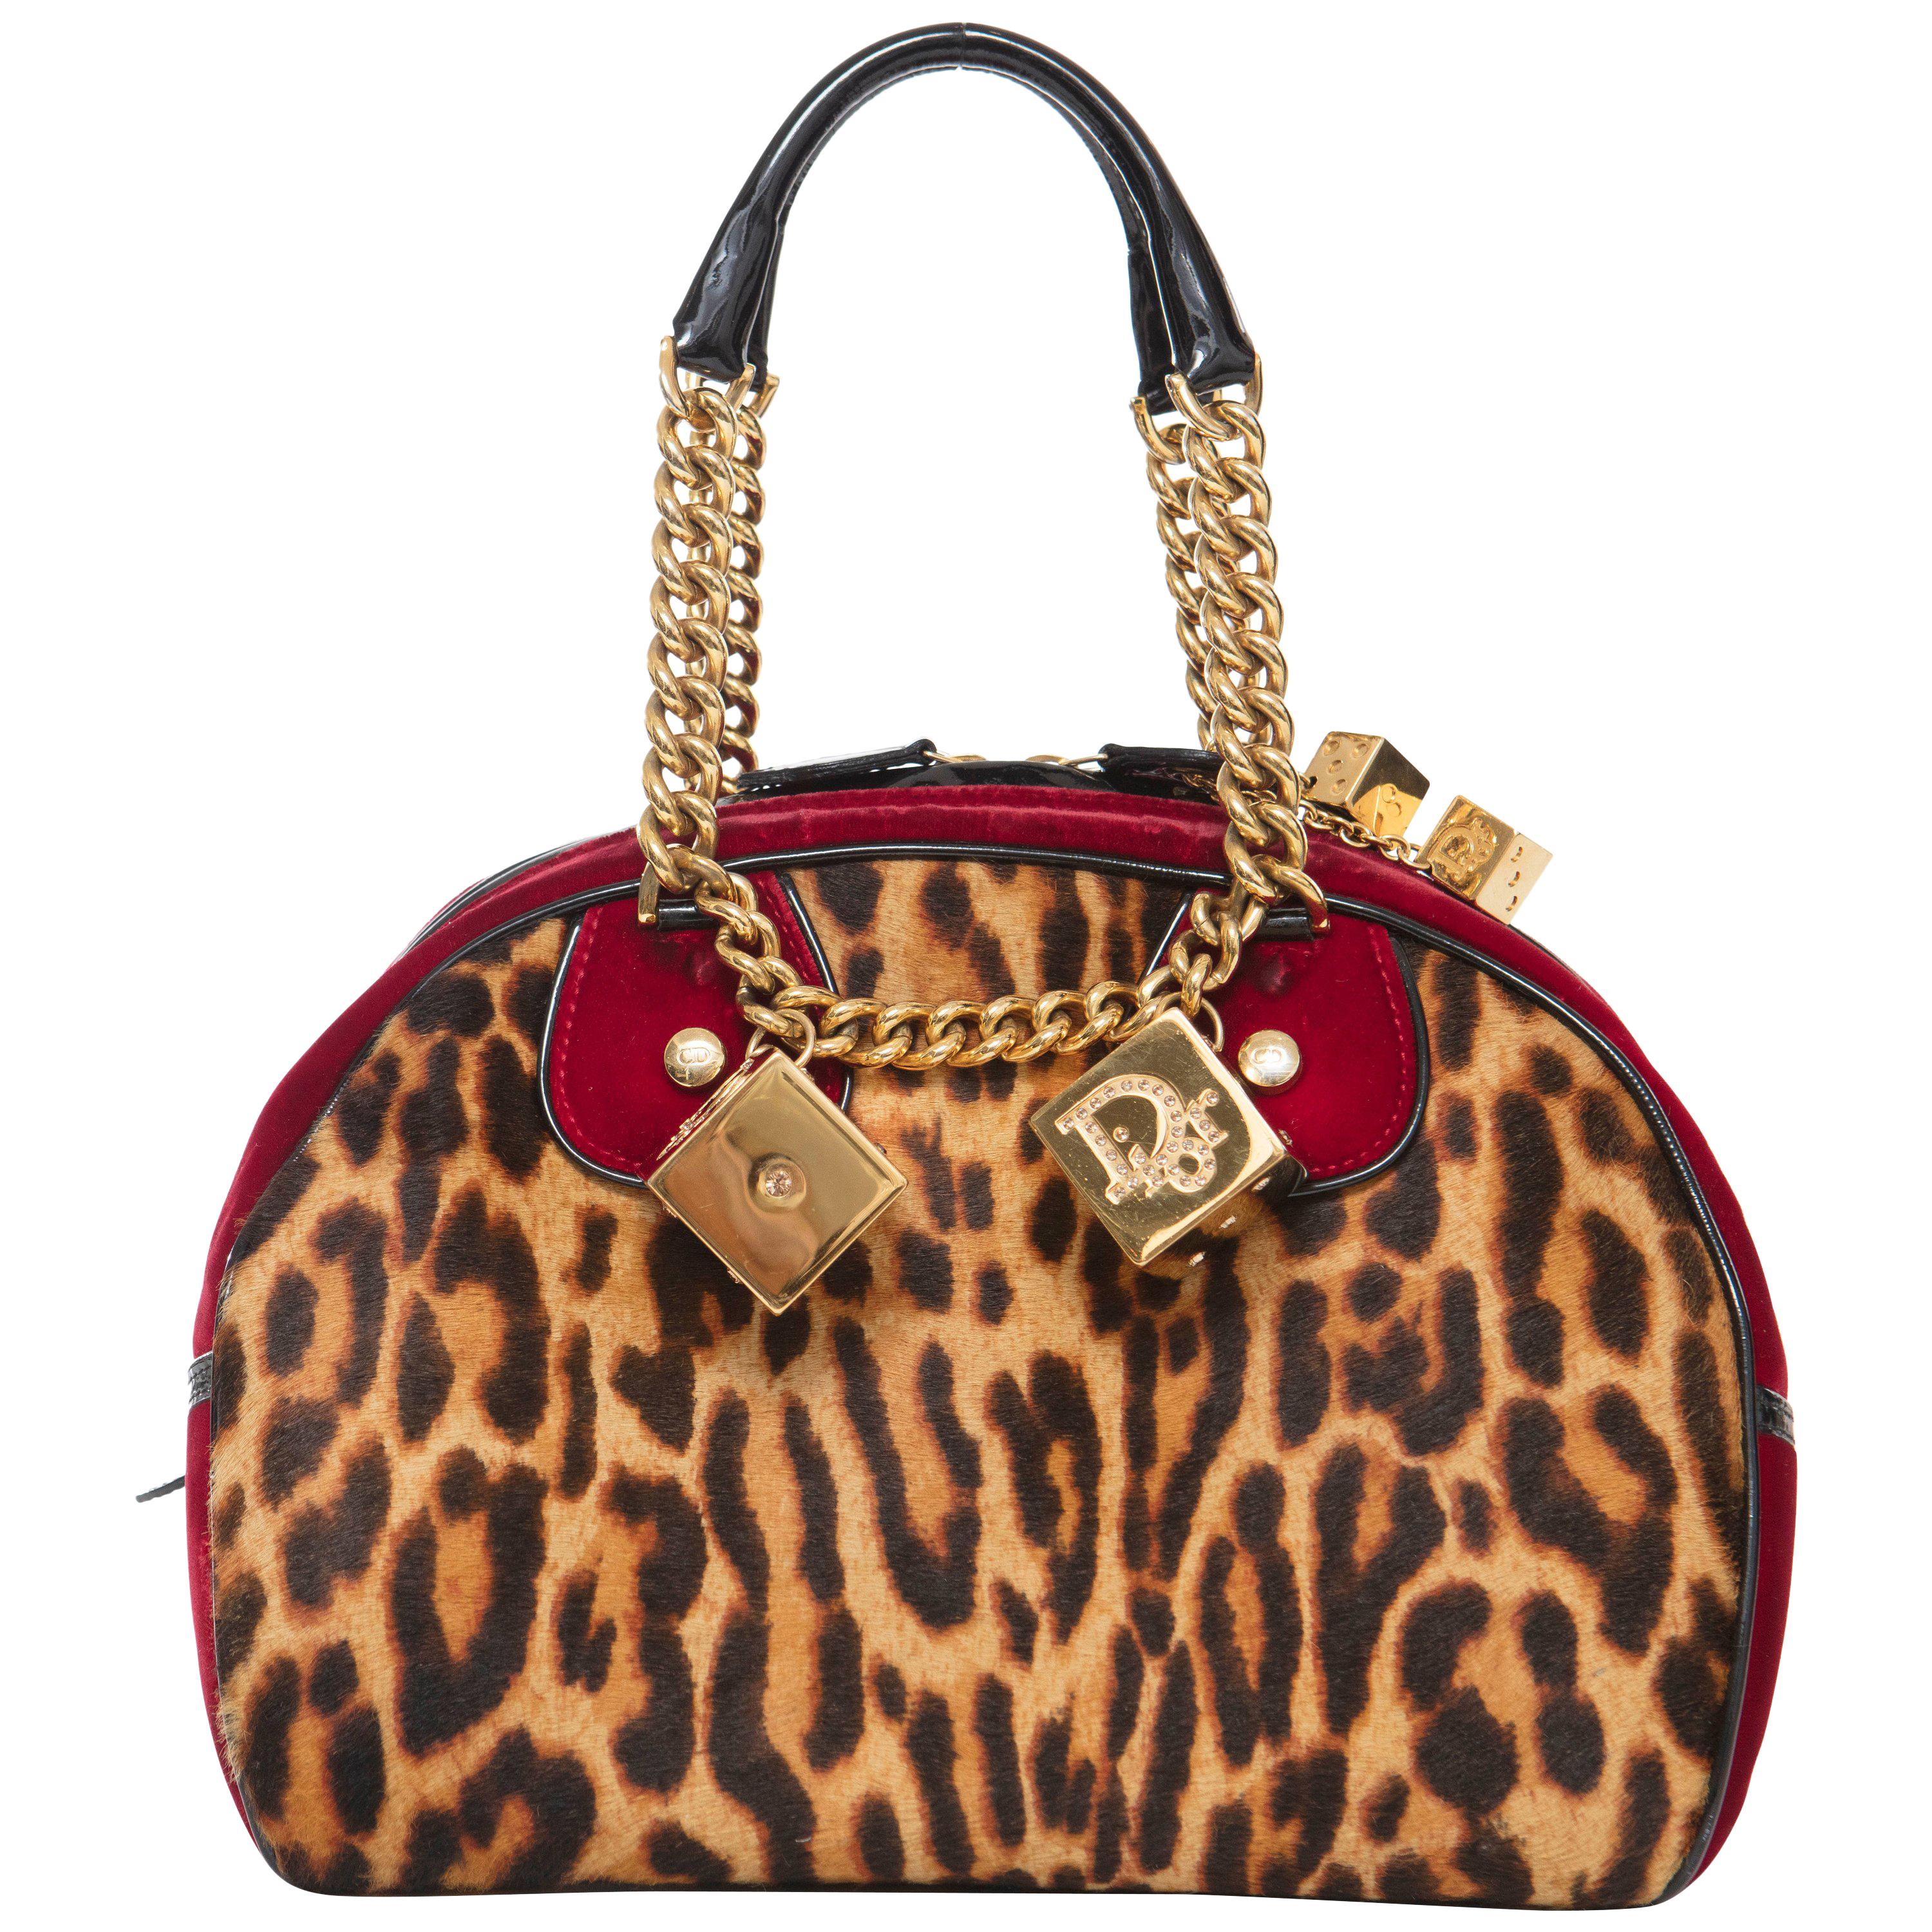 John Galliano for Christian Dior Runway Leopard Velvet Gambler Handbag, Fall 2004